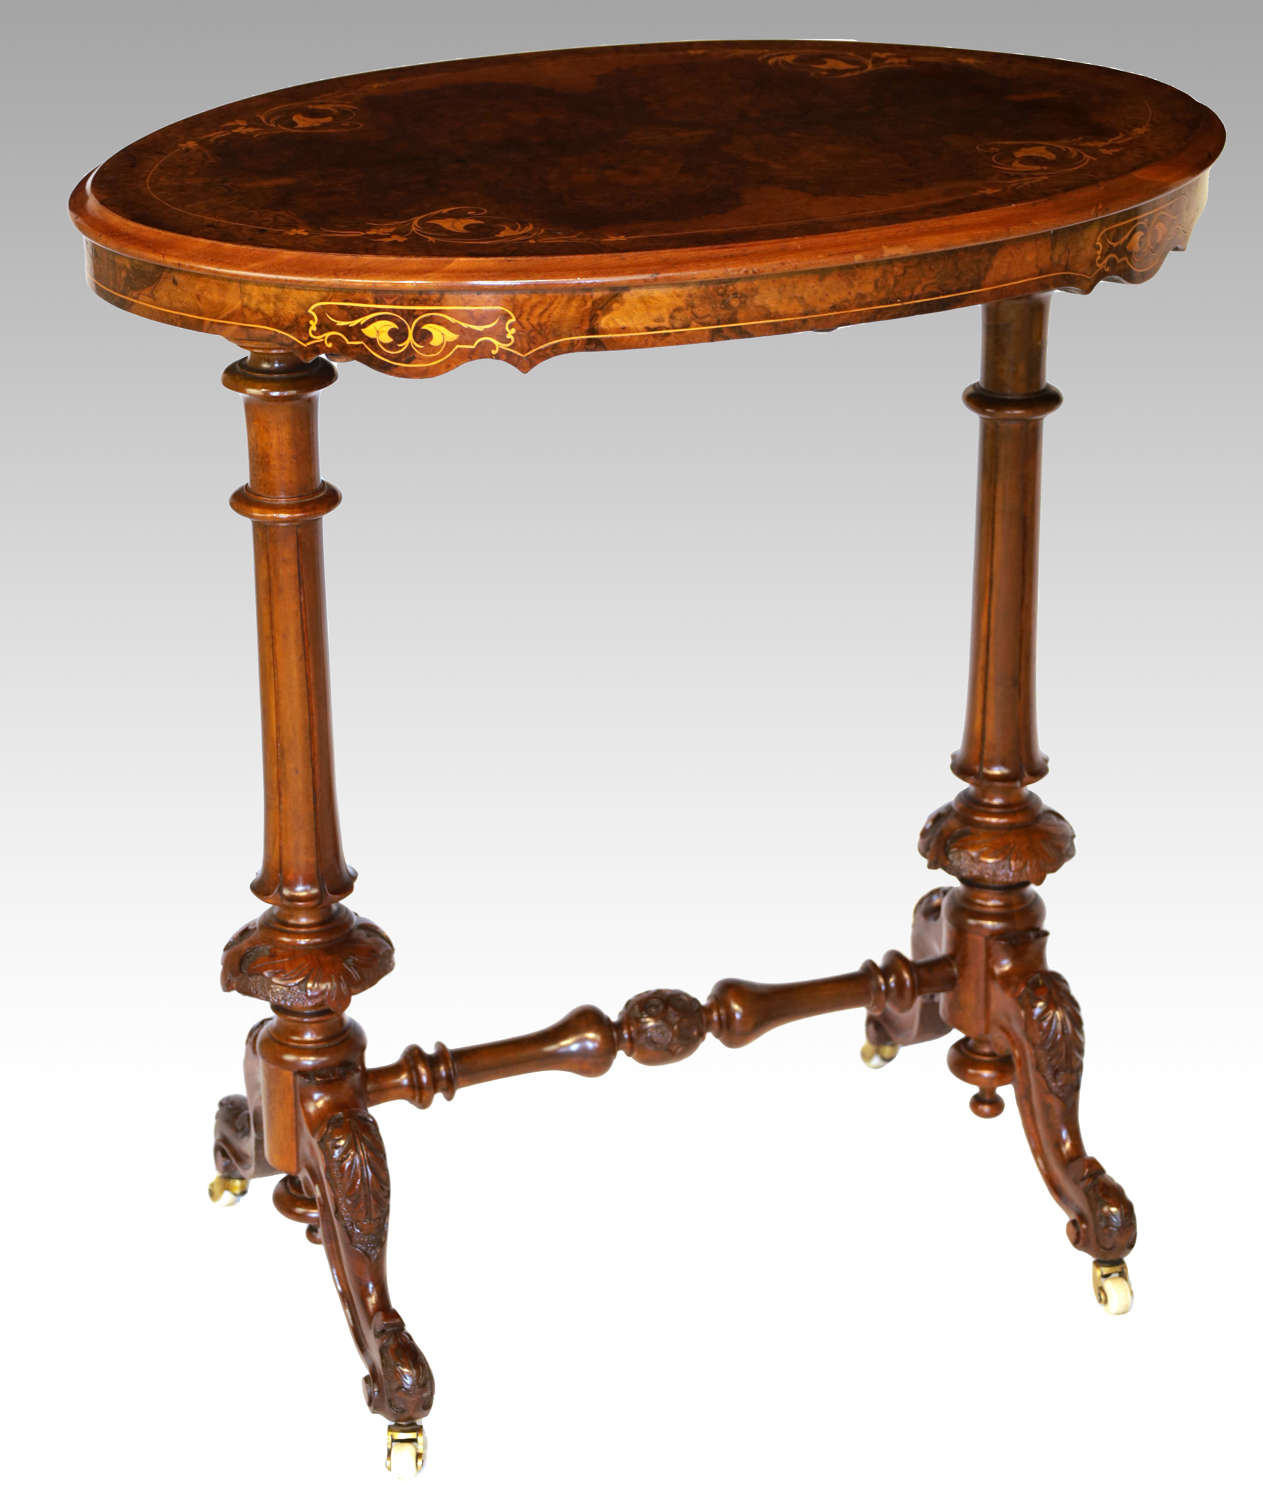 The Quality Victorian Burr-walnut Inlaid Stretcher Table